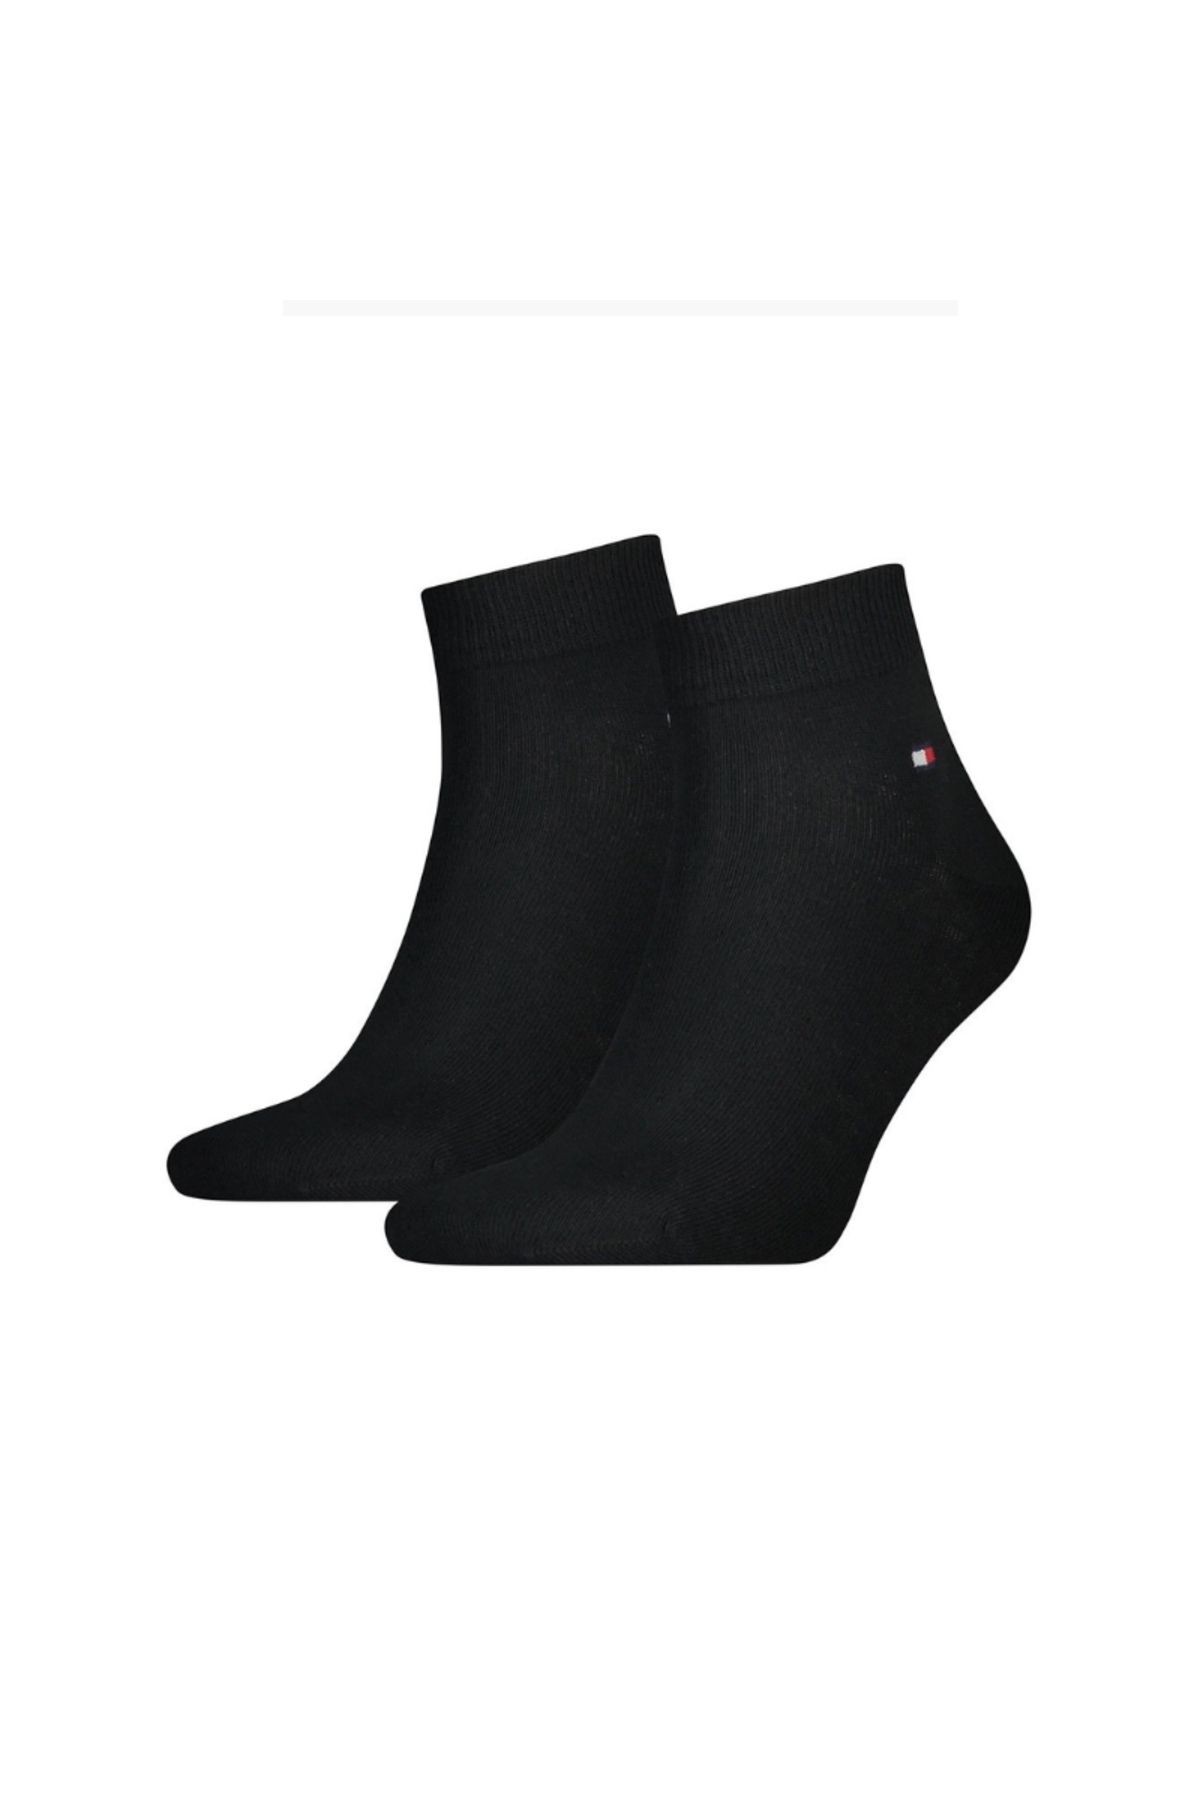 Tommy Hilfiger Erkek Marka Logolu Pamukllu Kısa Günlük Kullanıma Uygun Siyah Çorap 09a3425001200-siyah